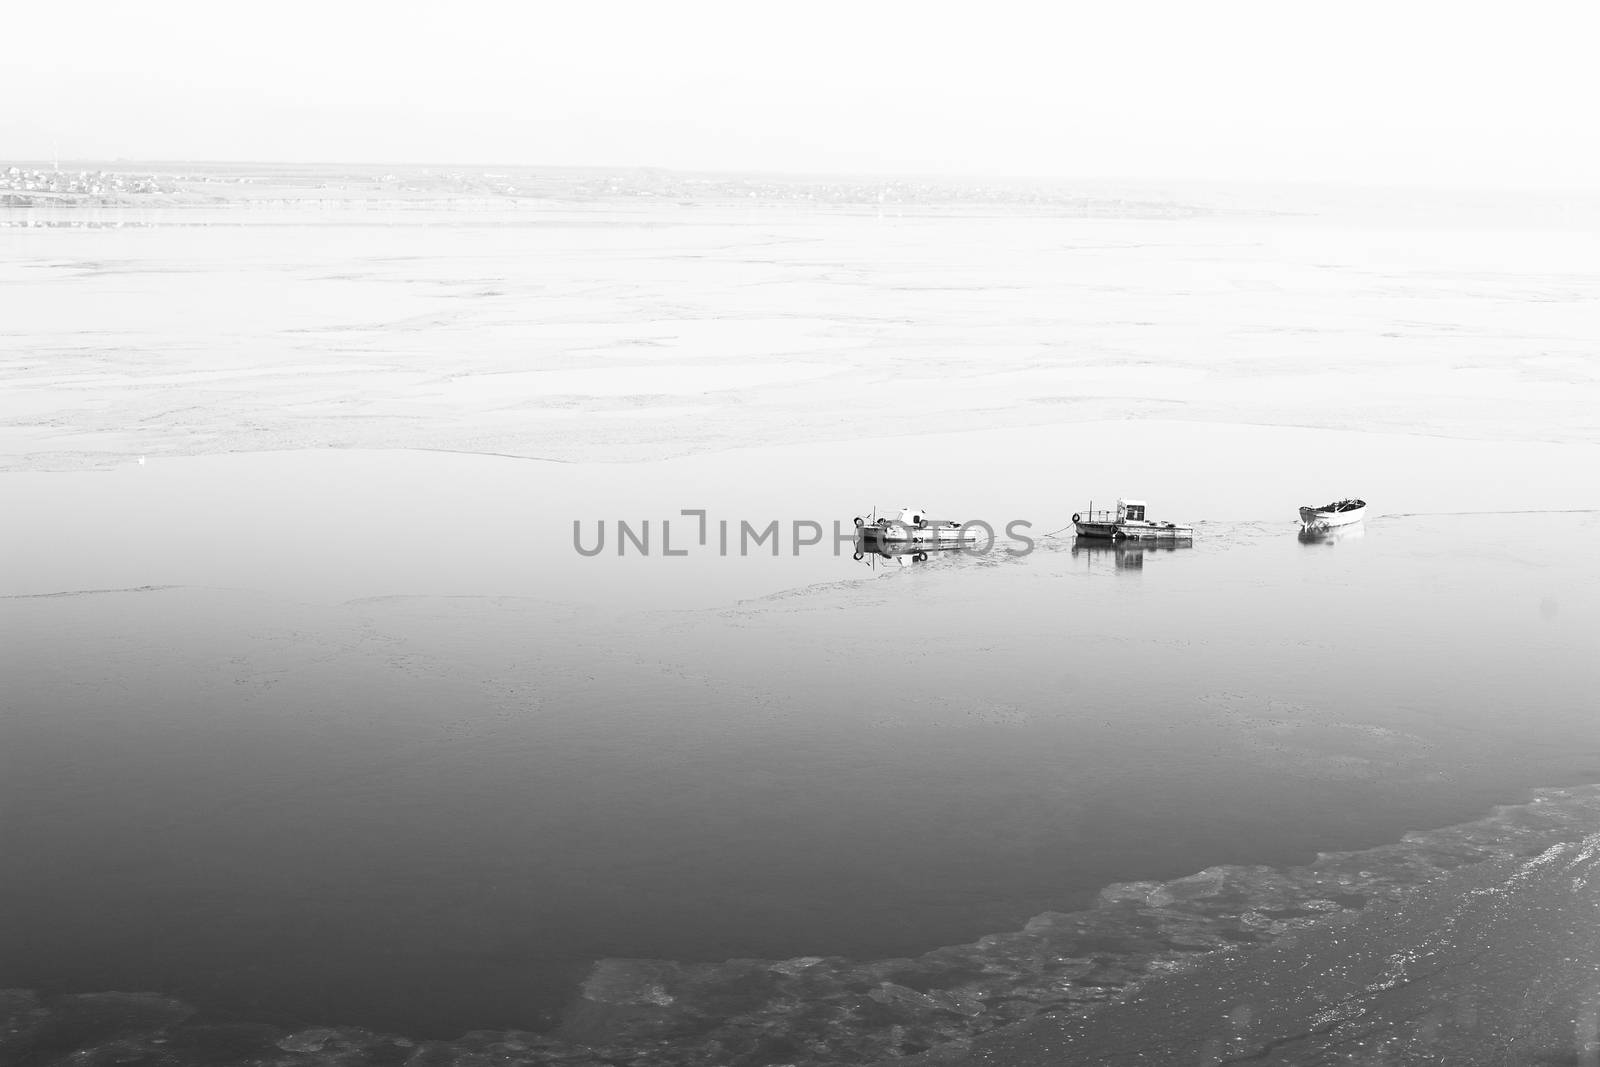 A few small ships in the winter sea near coast black and white photo